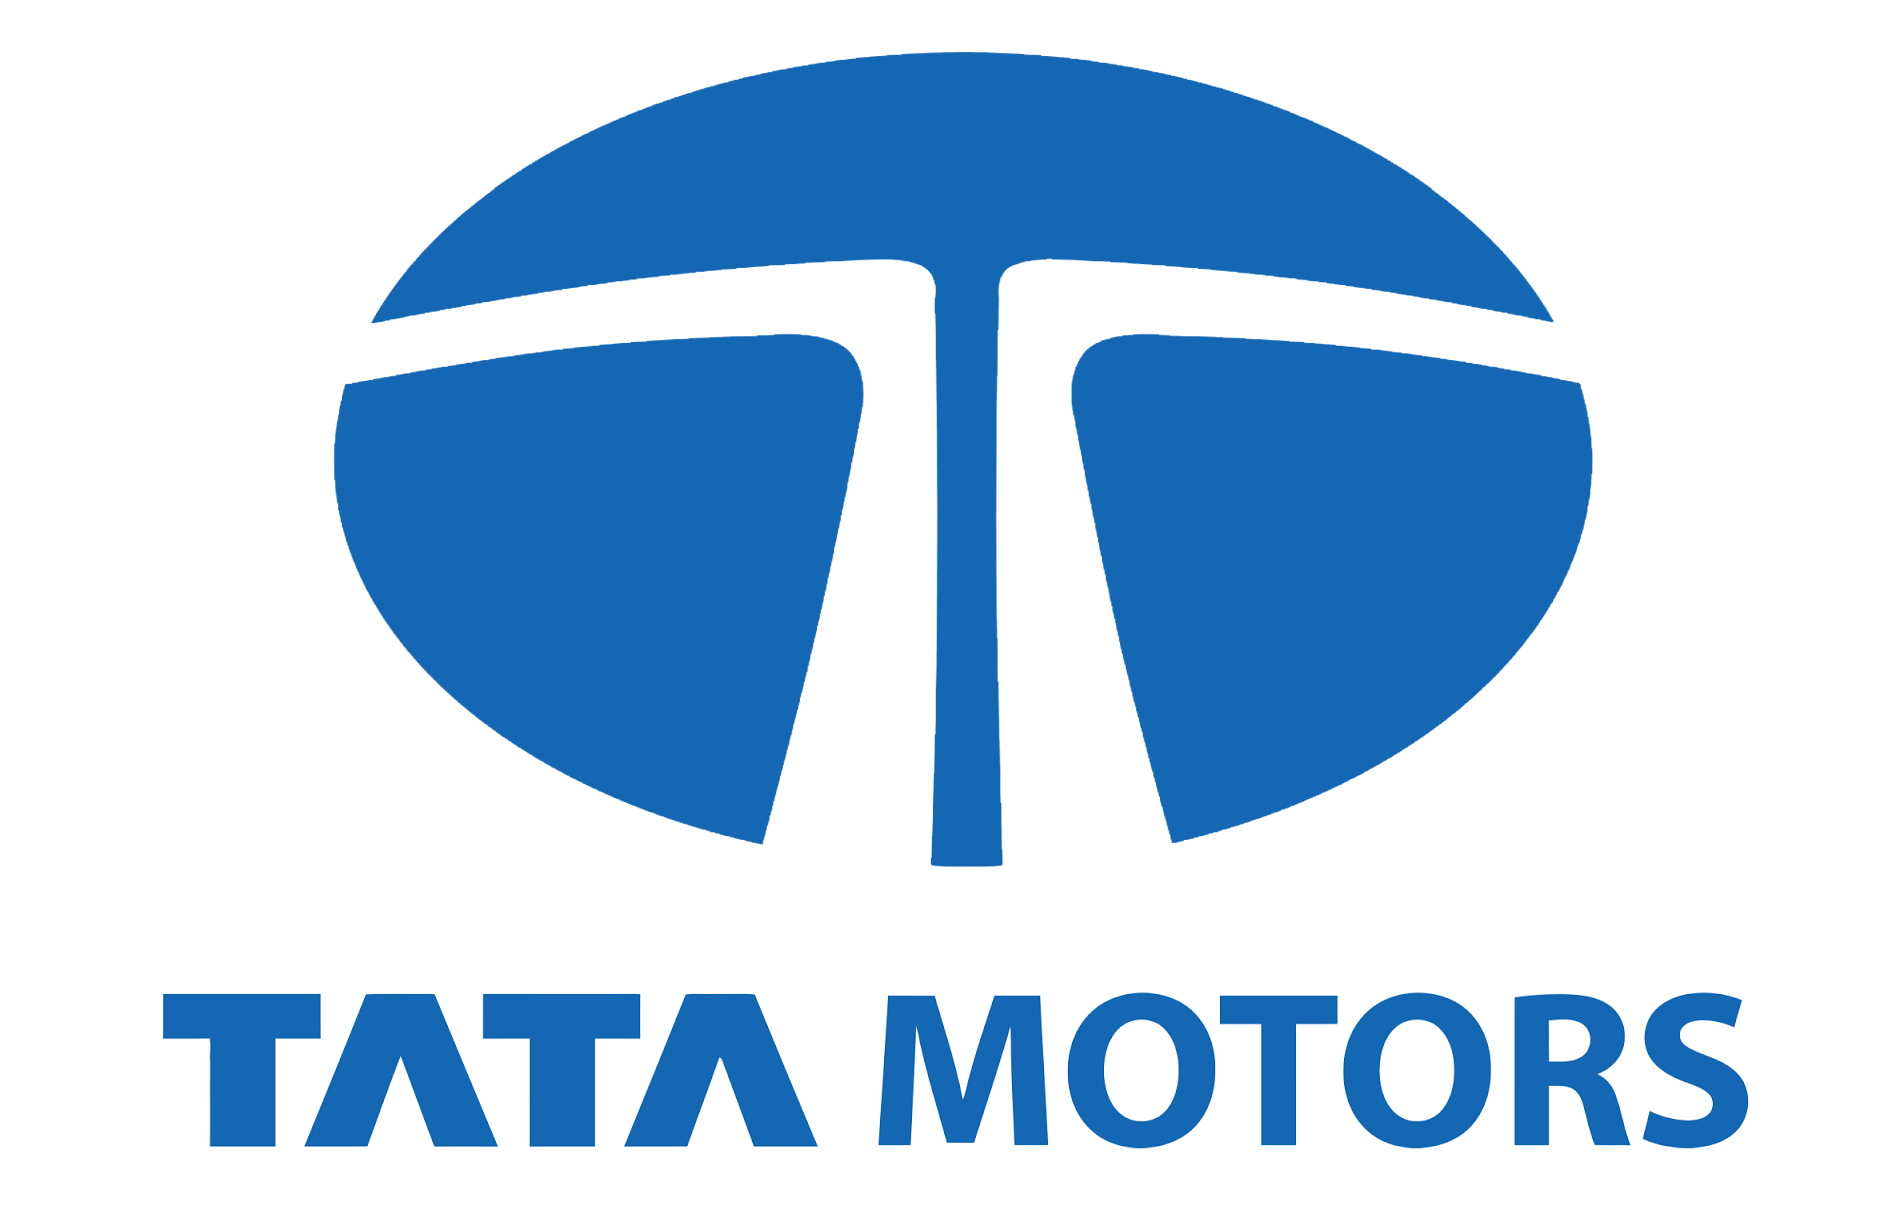 Tata Motors Cars Showroom - Fortune Cars|Show Room|Automotive